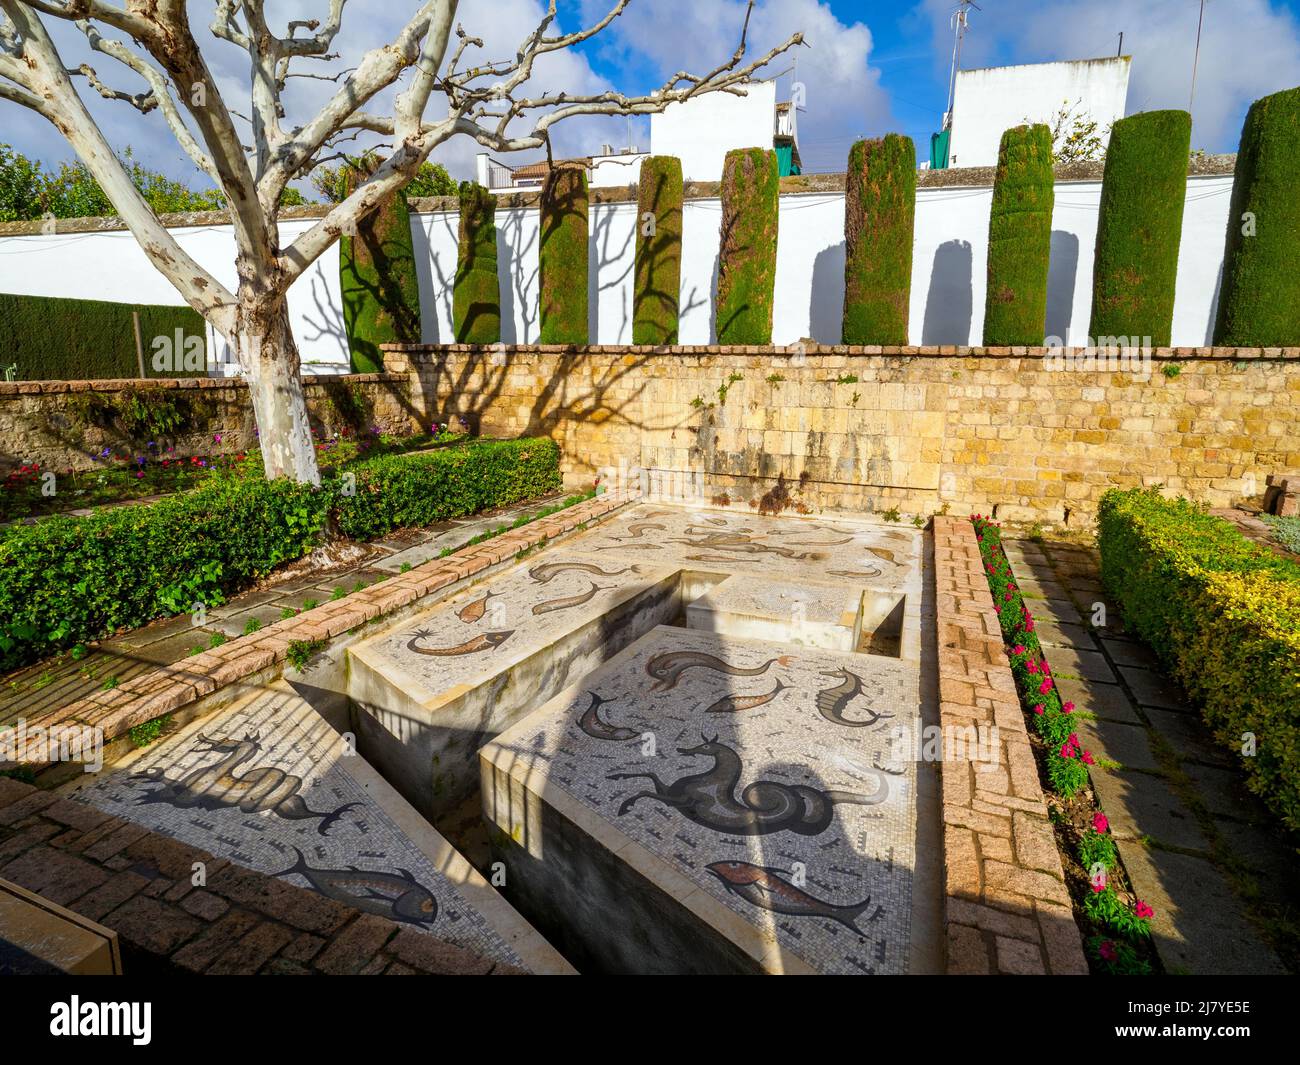 Mosaico romano nei giardini dell'Alcazar de los Reyes Cristianos - Cordoba, Spagna Foto Stock